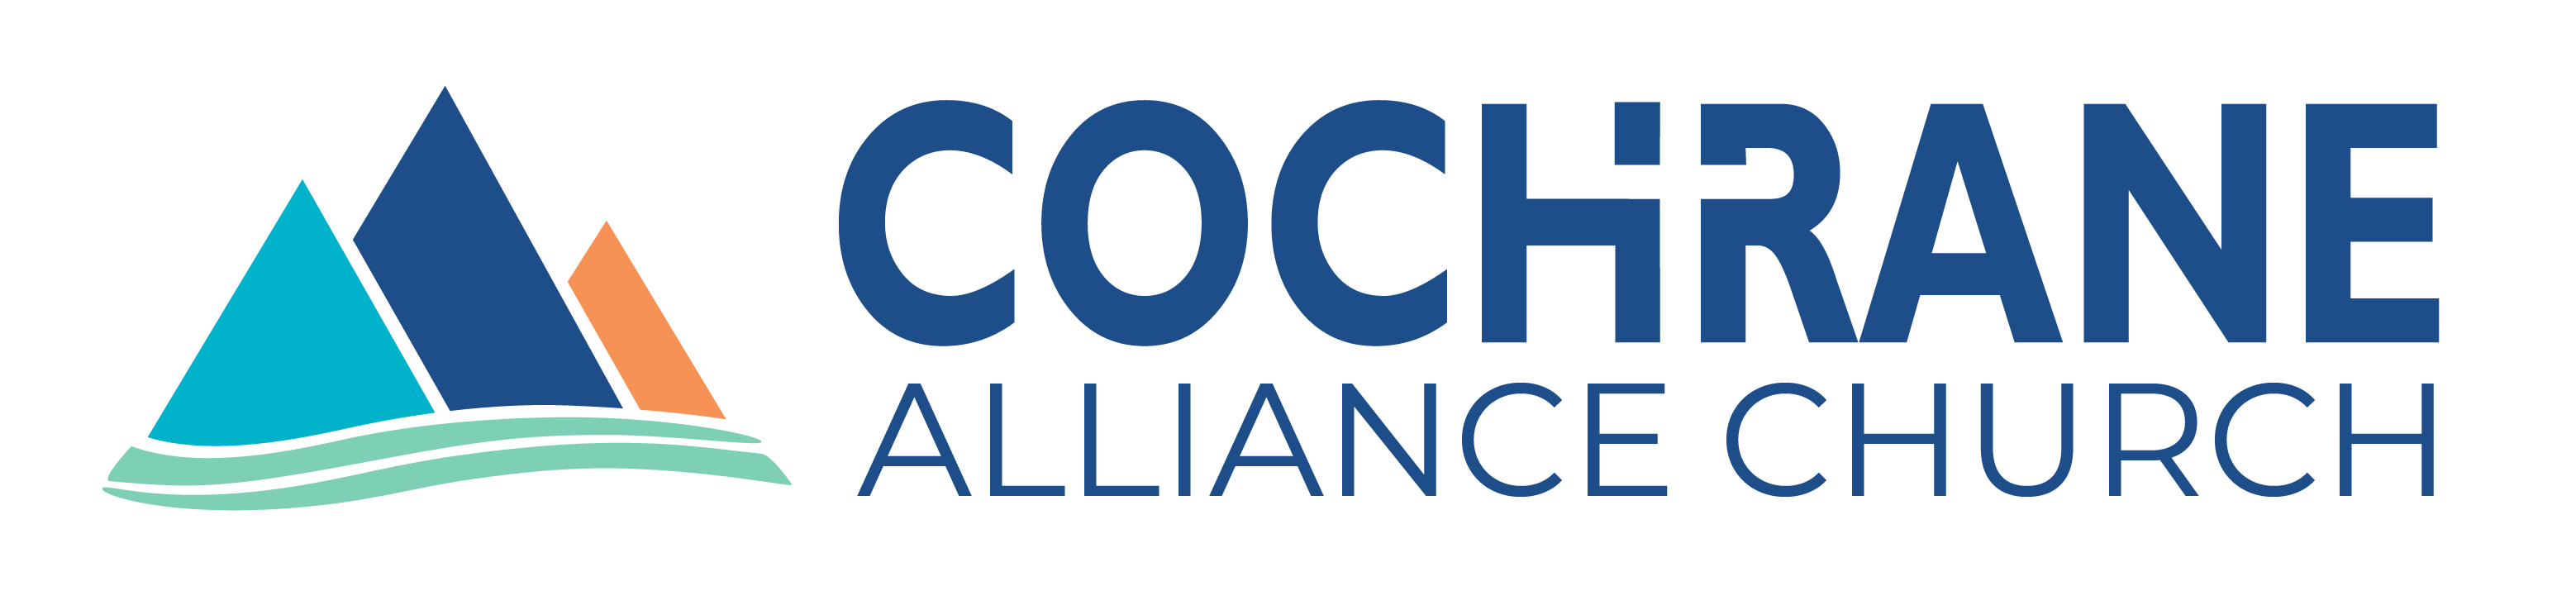 Cochrane Alliance Church